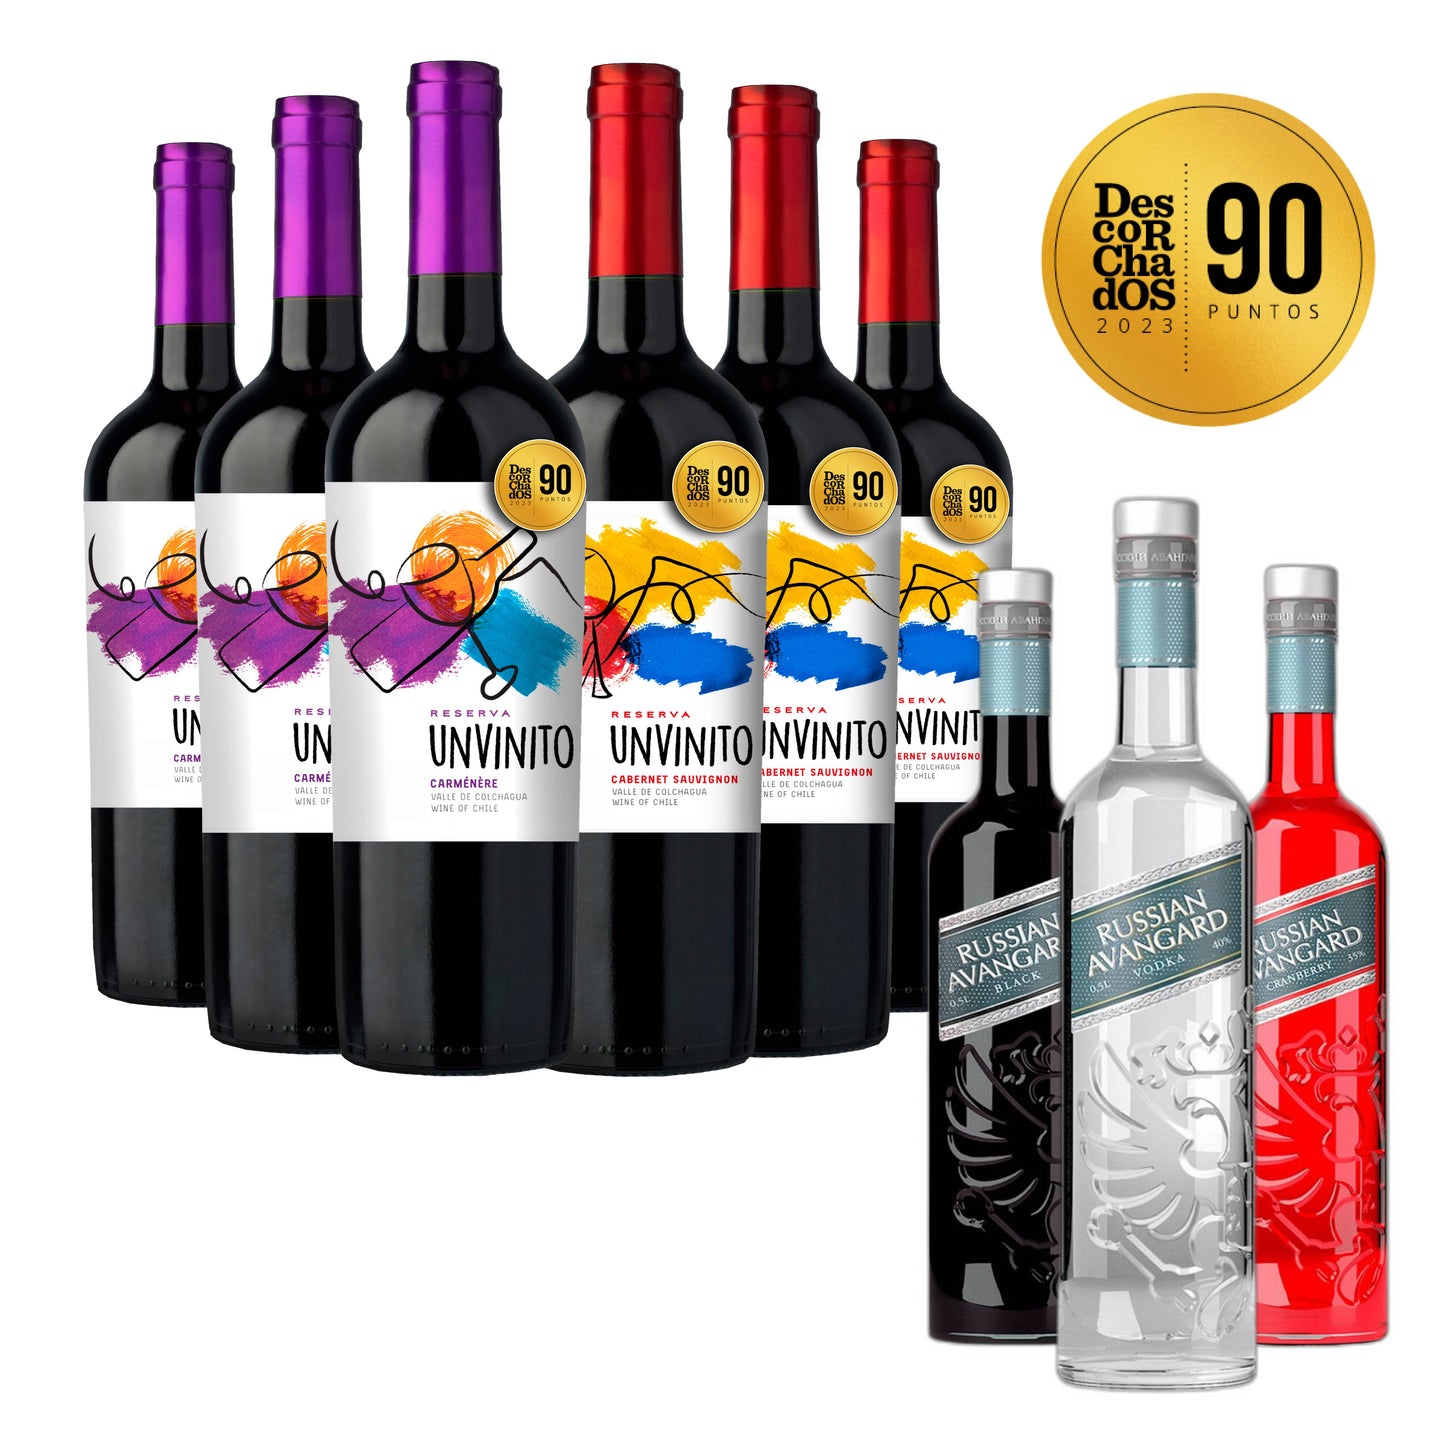 Pack-6-botellas-vino-de-autor-unvinito-con-3-botellas-de-vodka-ruso-russian-avangard-variedades